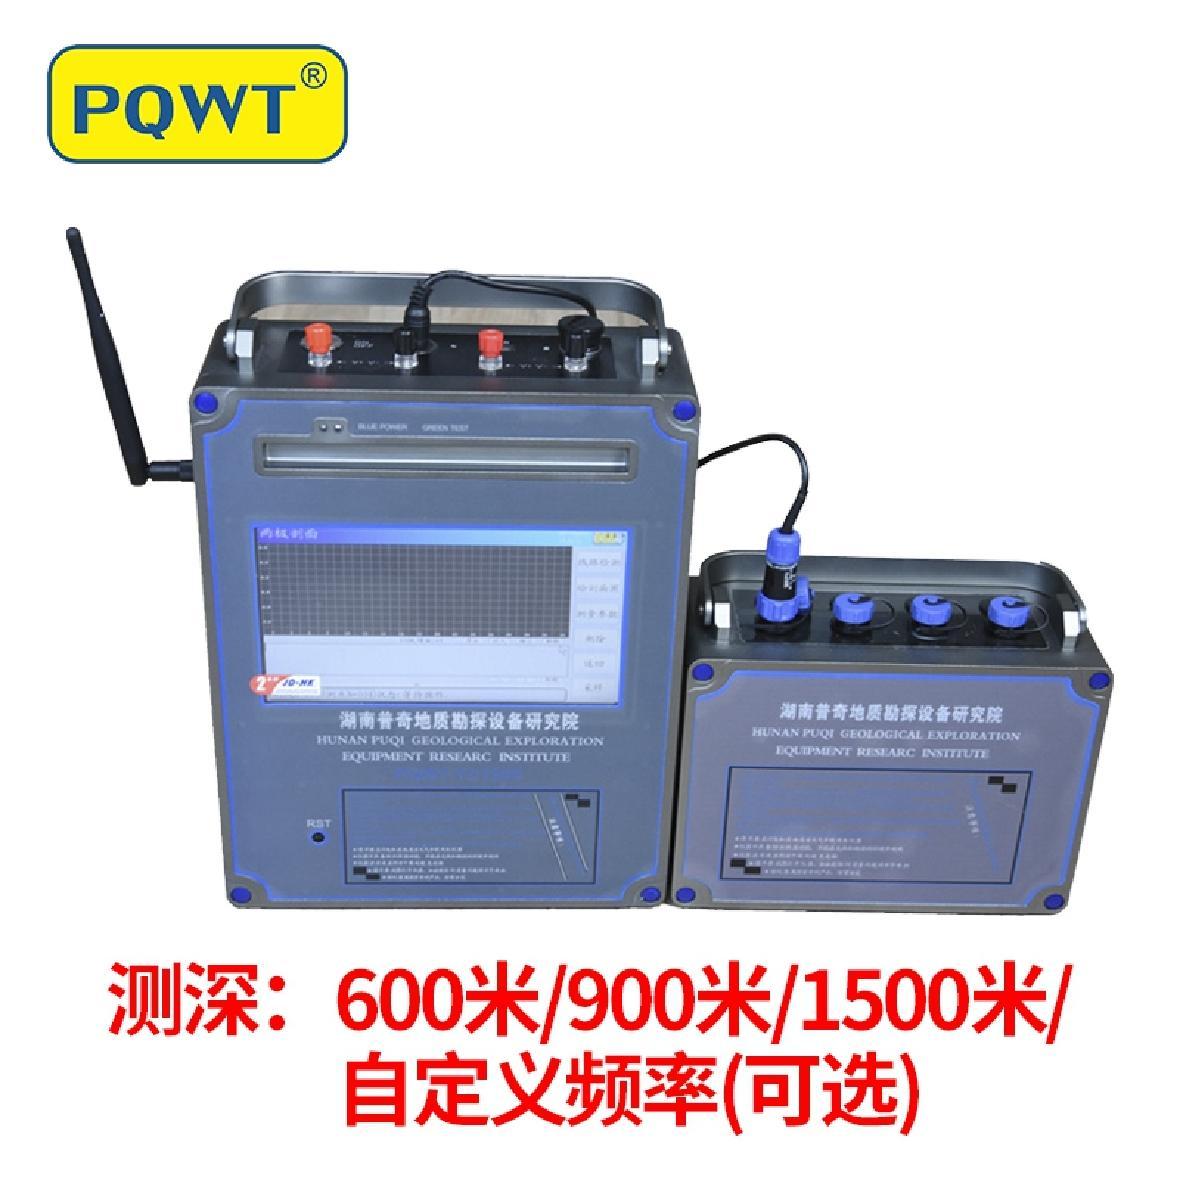 自动成图探矿仪PQWT-WT700